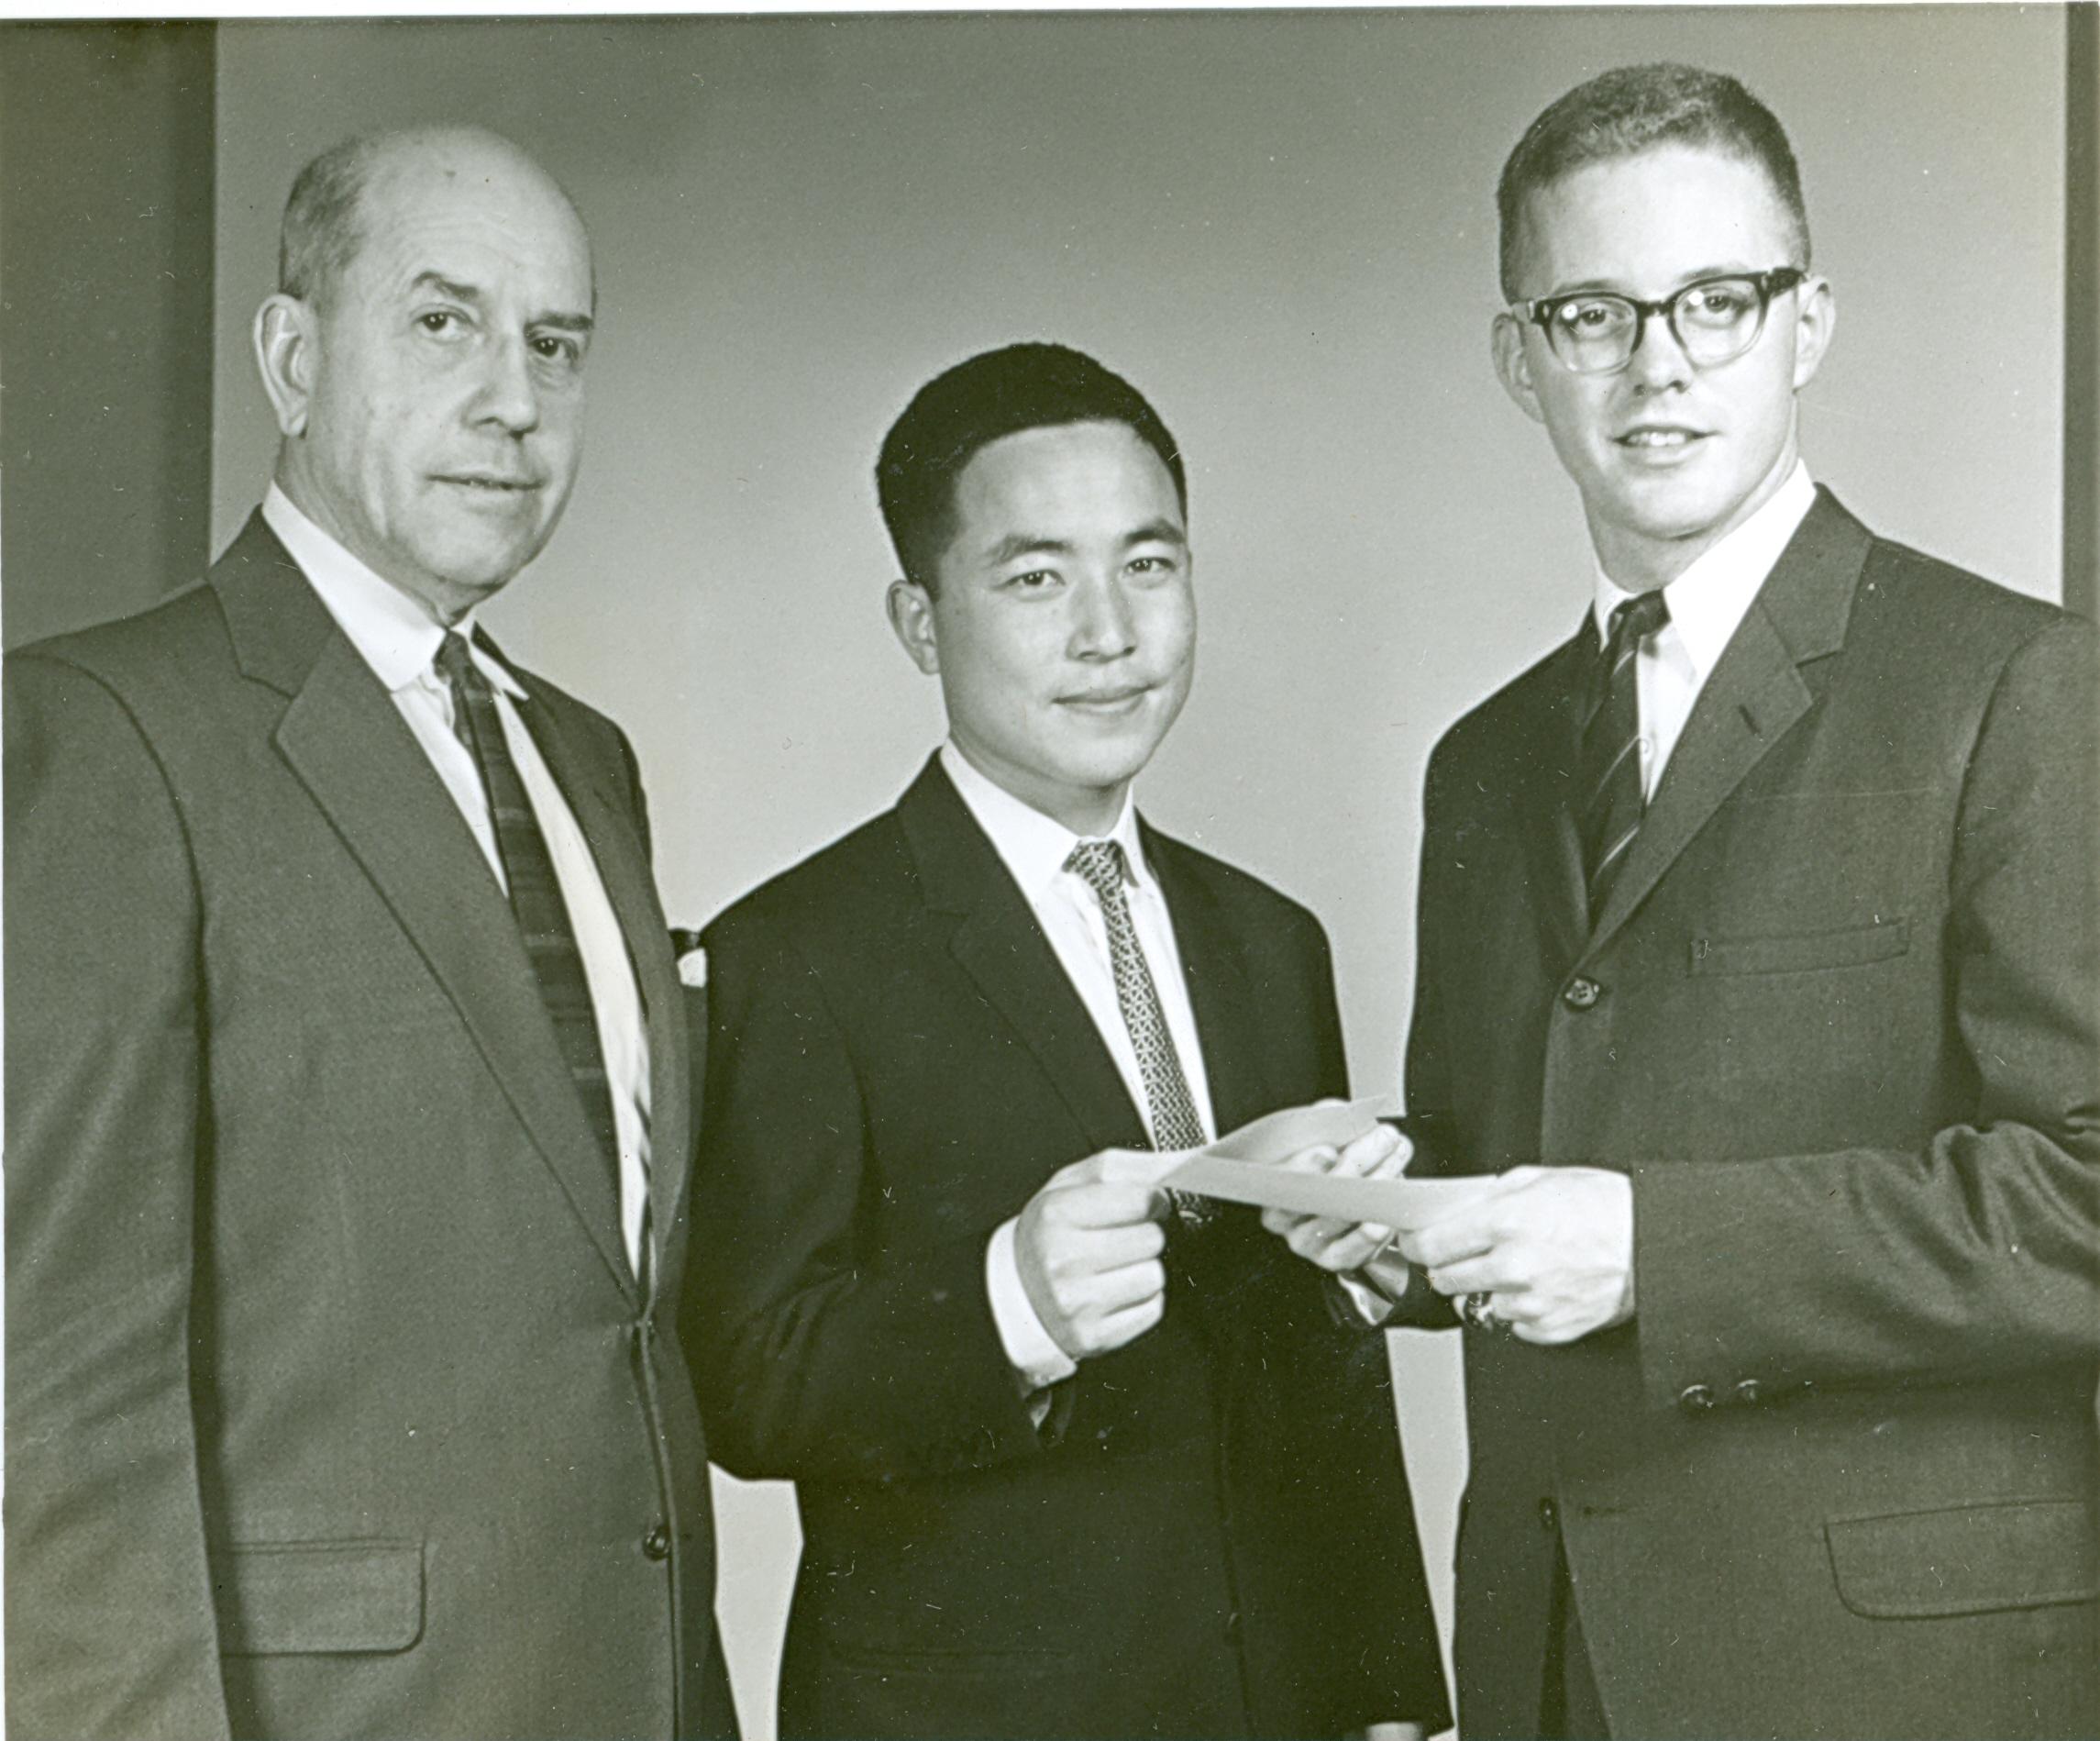 Winning the Rotary Club Travel Award at Auburn University, 1964